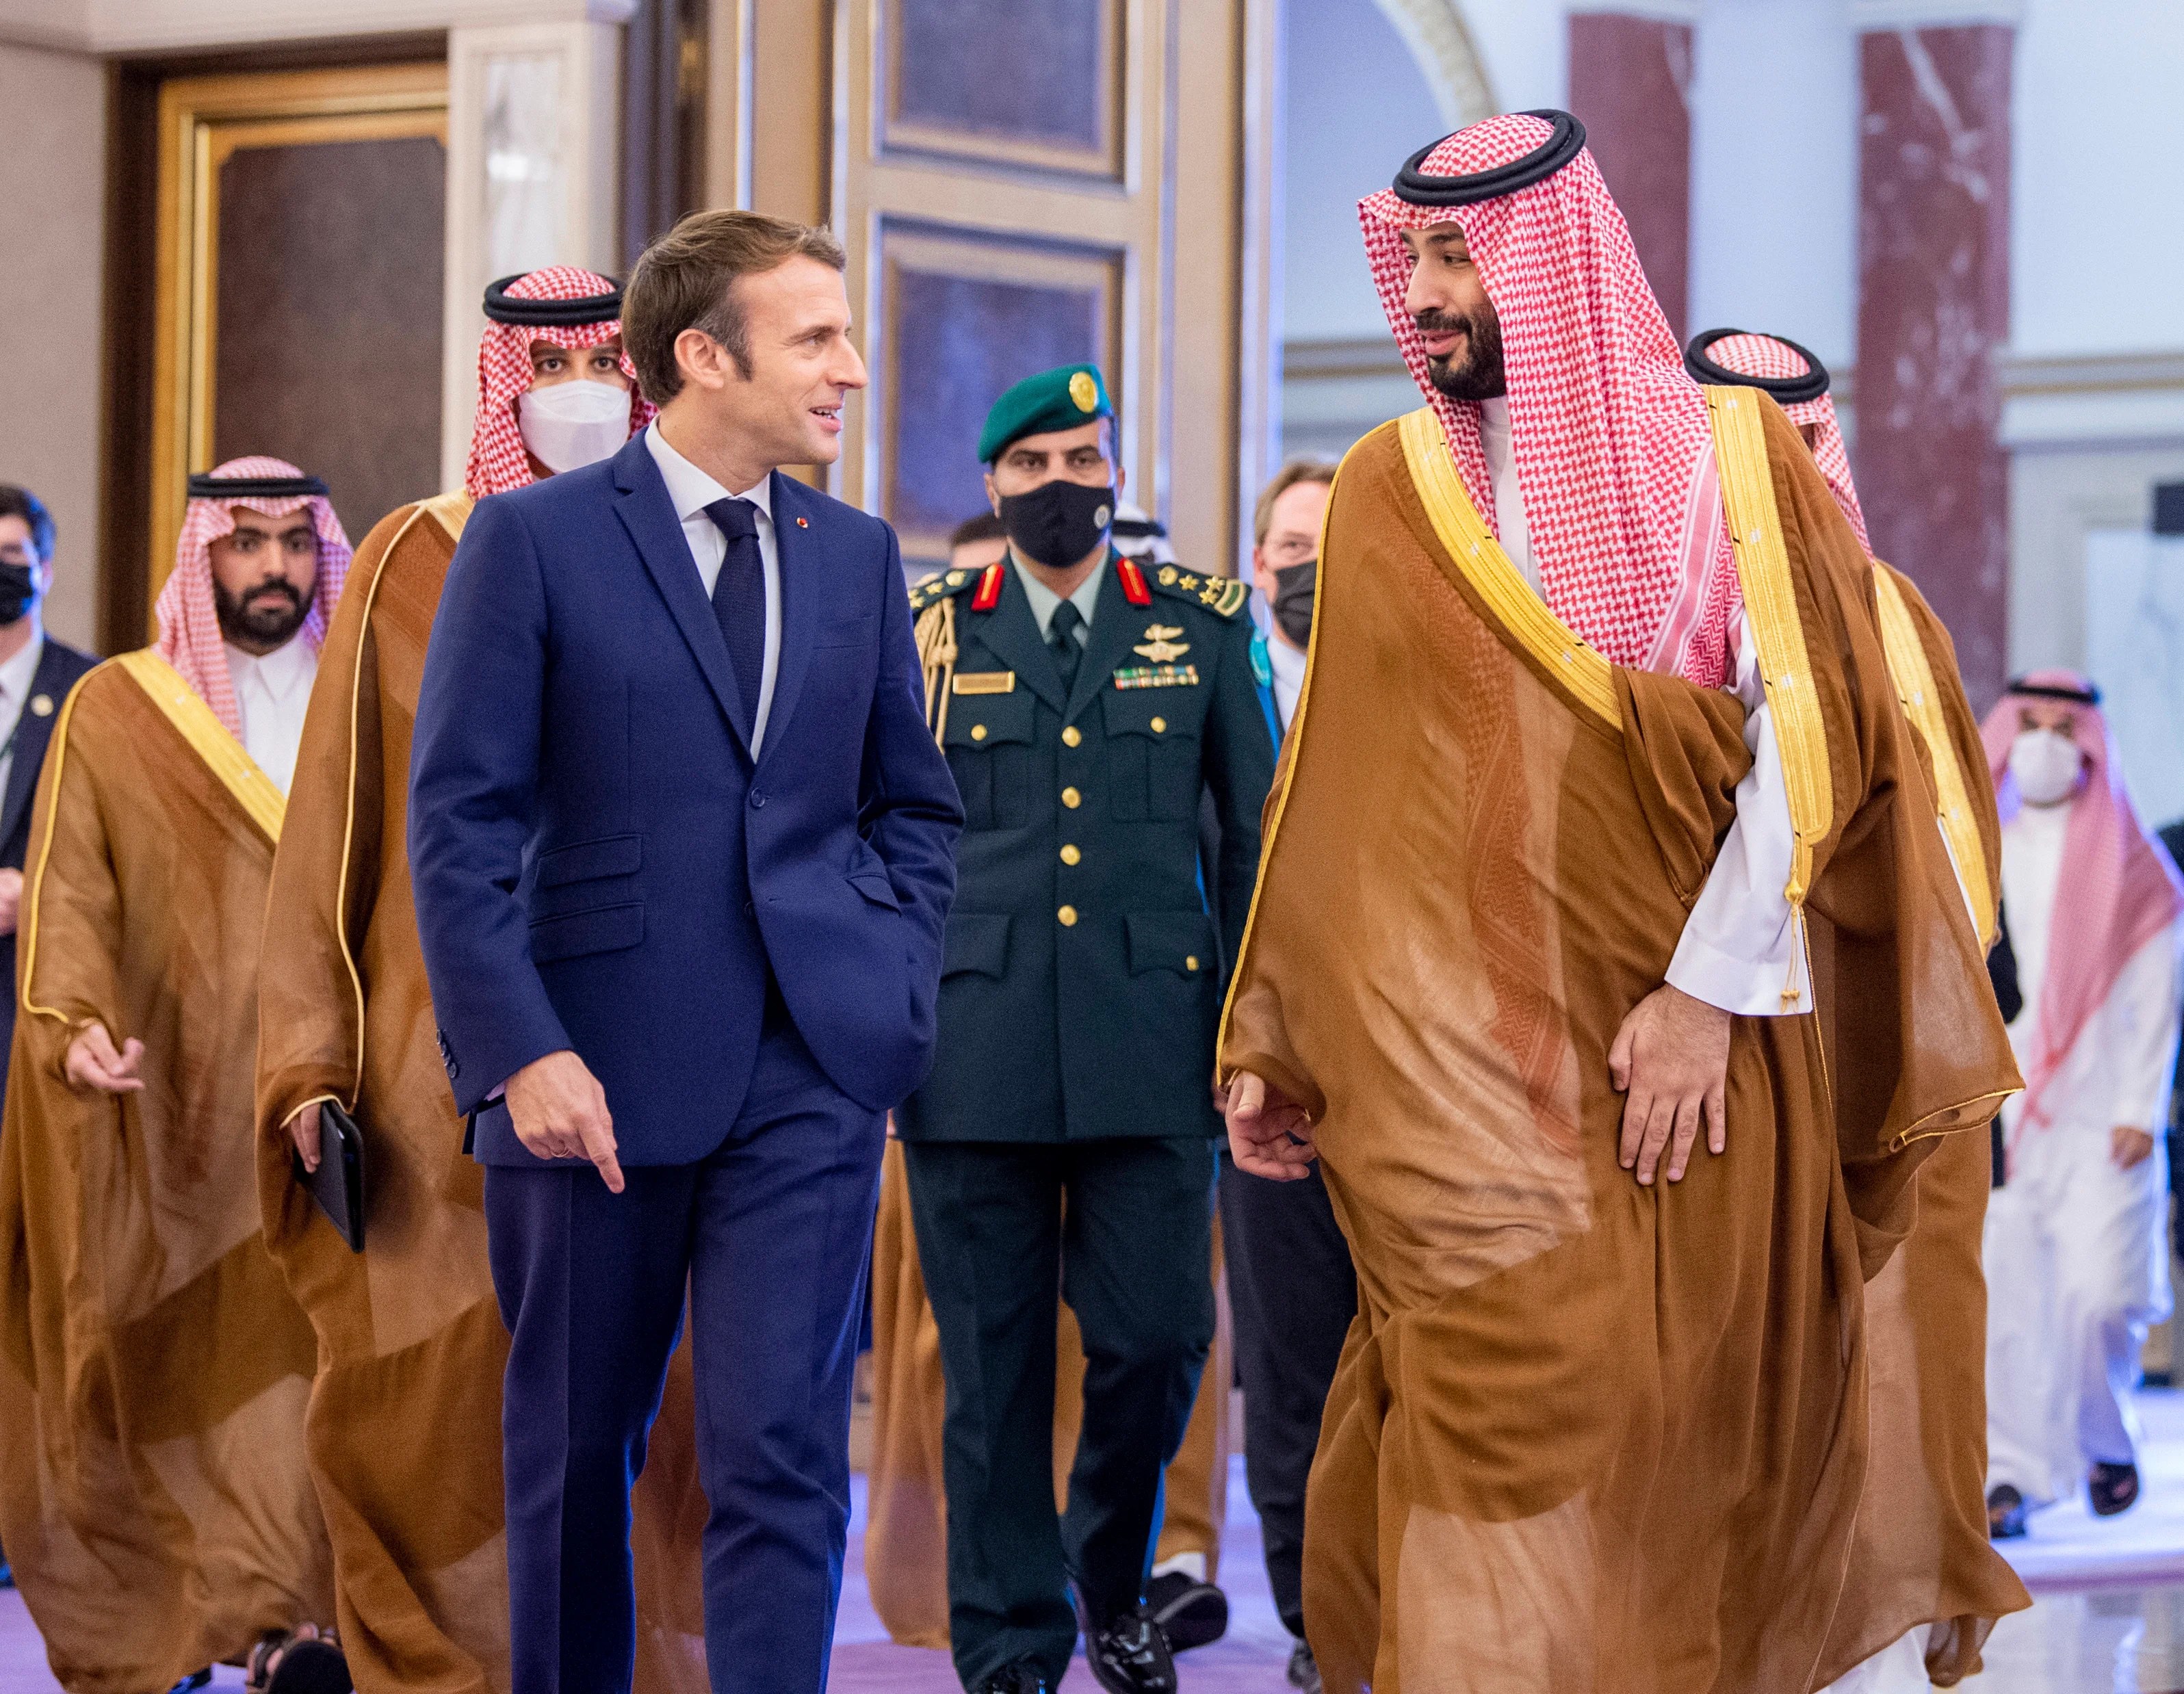 Macron Returns To Qatar For Love Of Sport, Despite Criticism